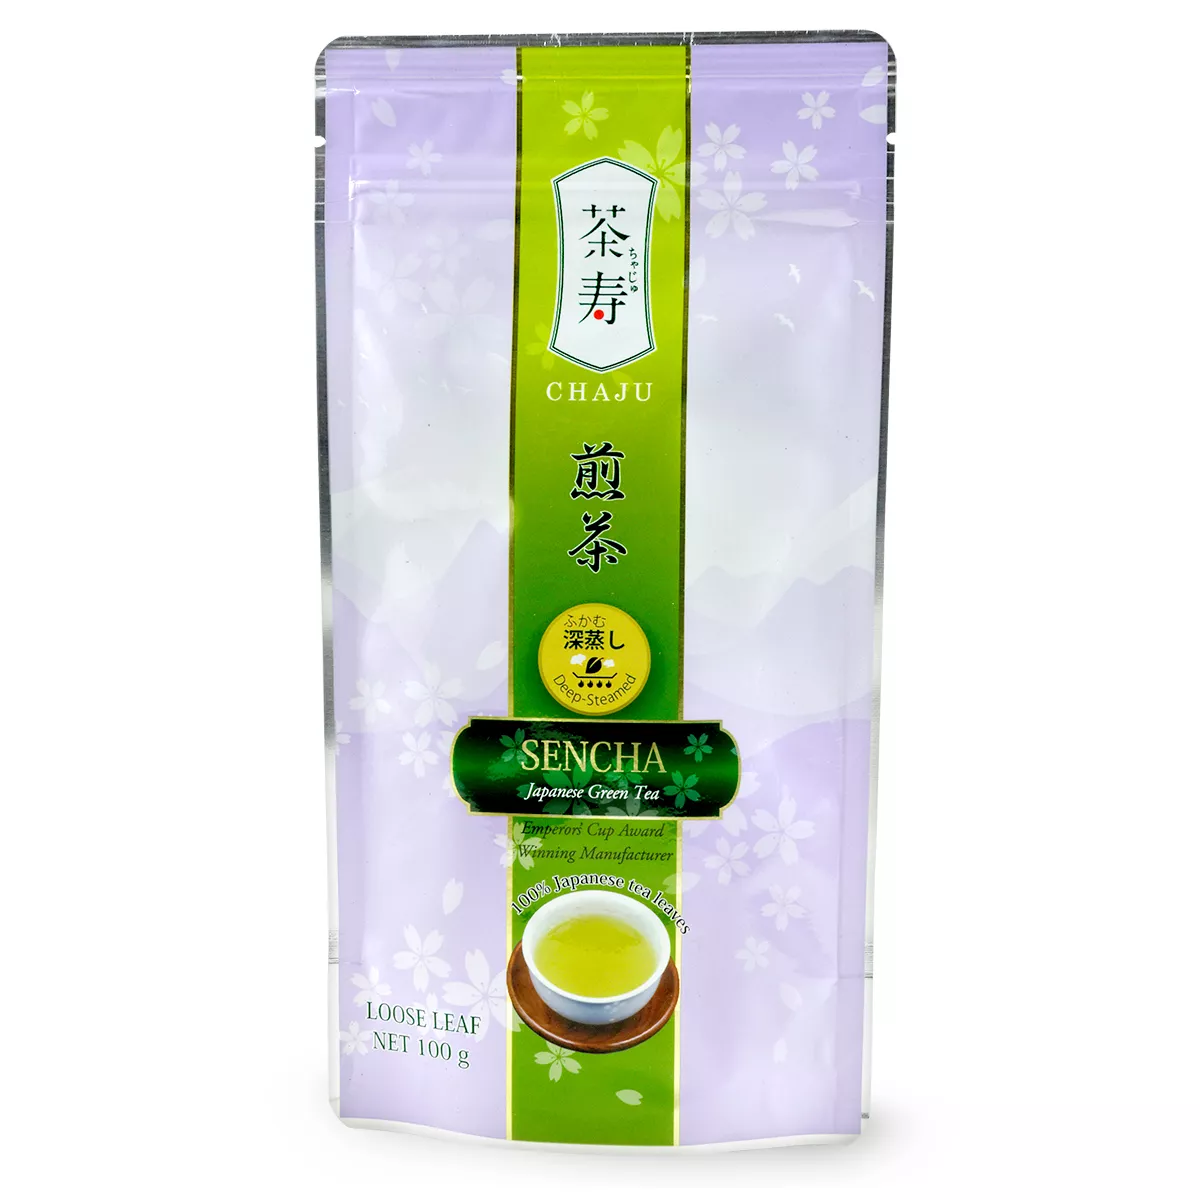 Ceai verde Sencha CHAJU 100g, [],asianfood.ro